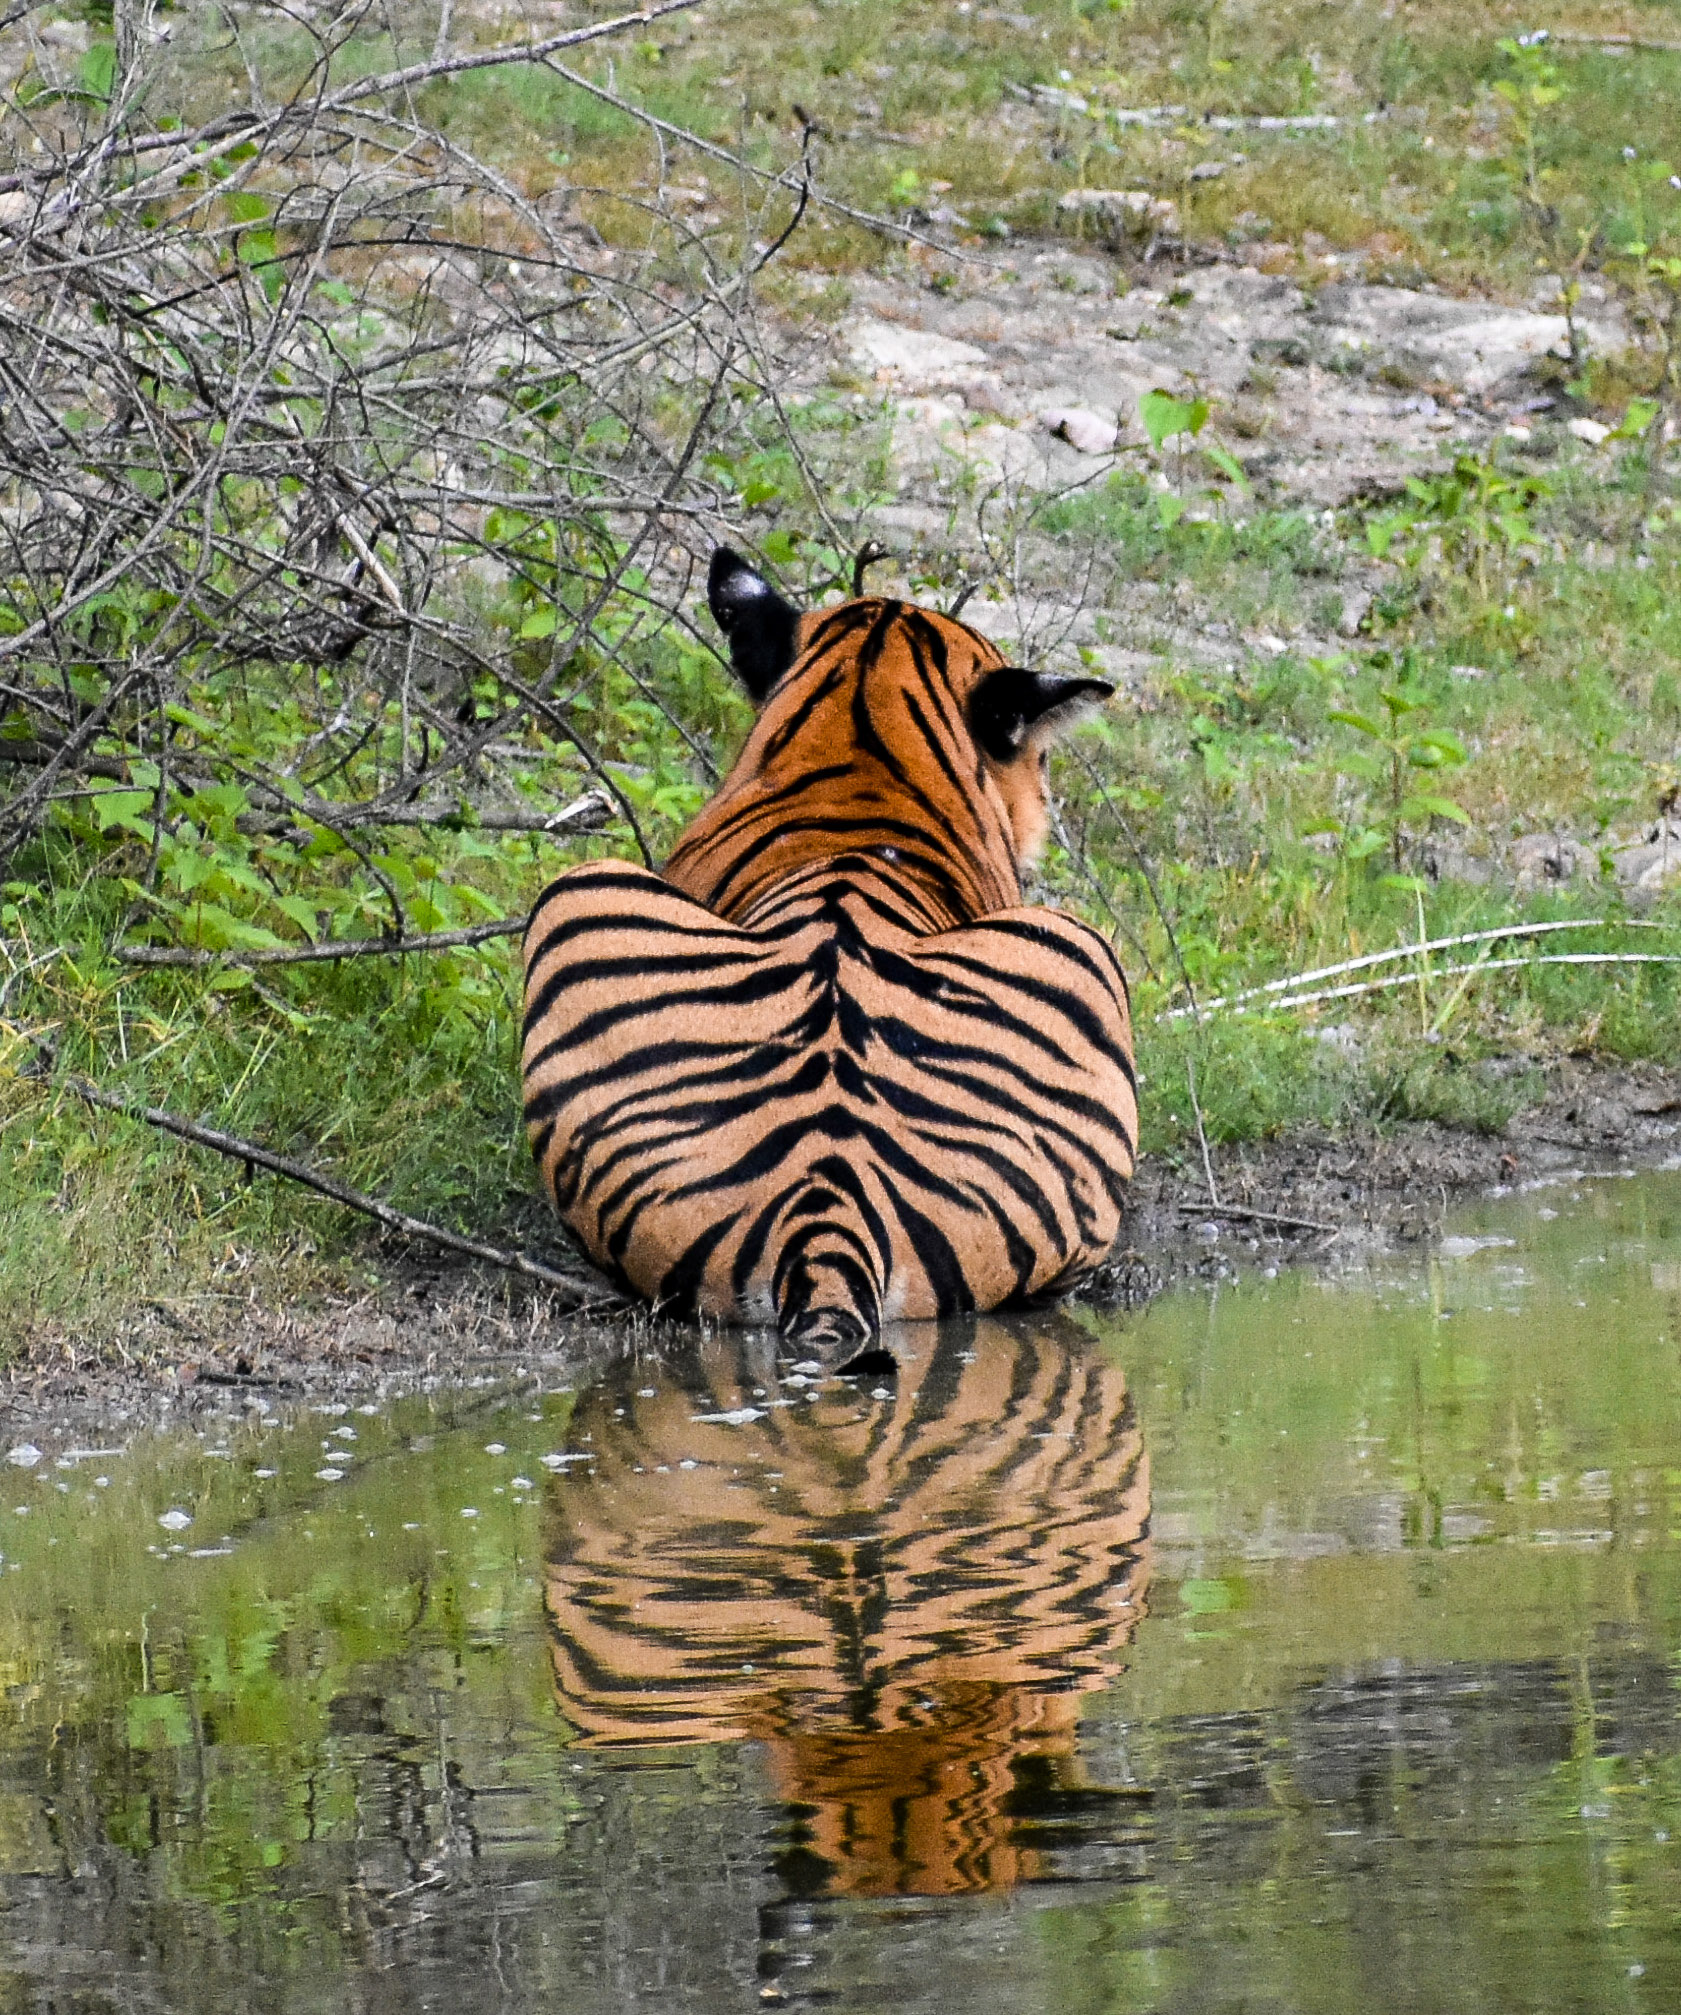 A Bengal tiger sitting near a pond